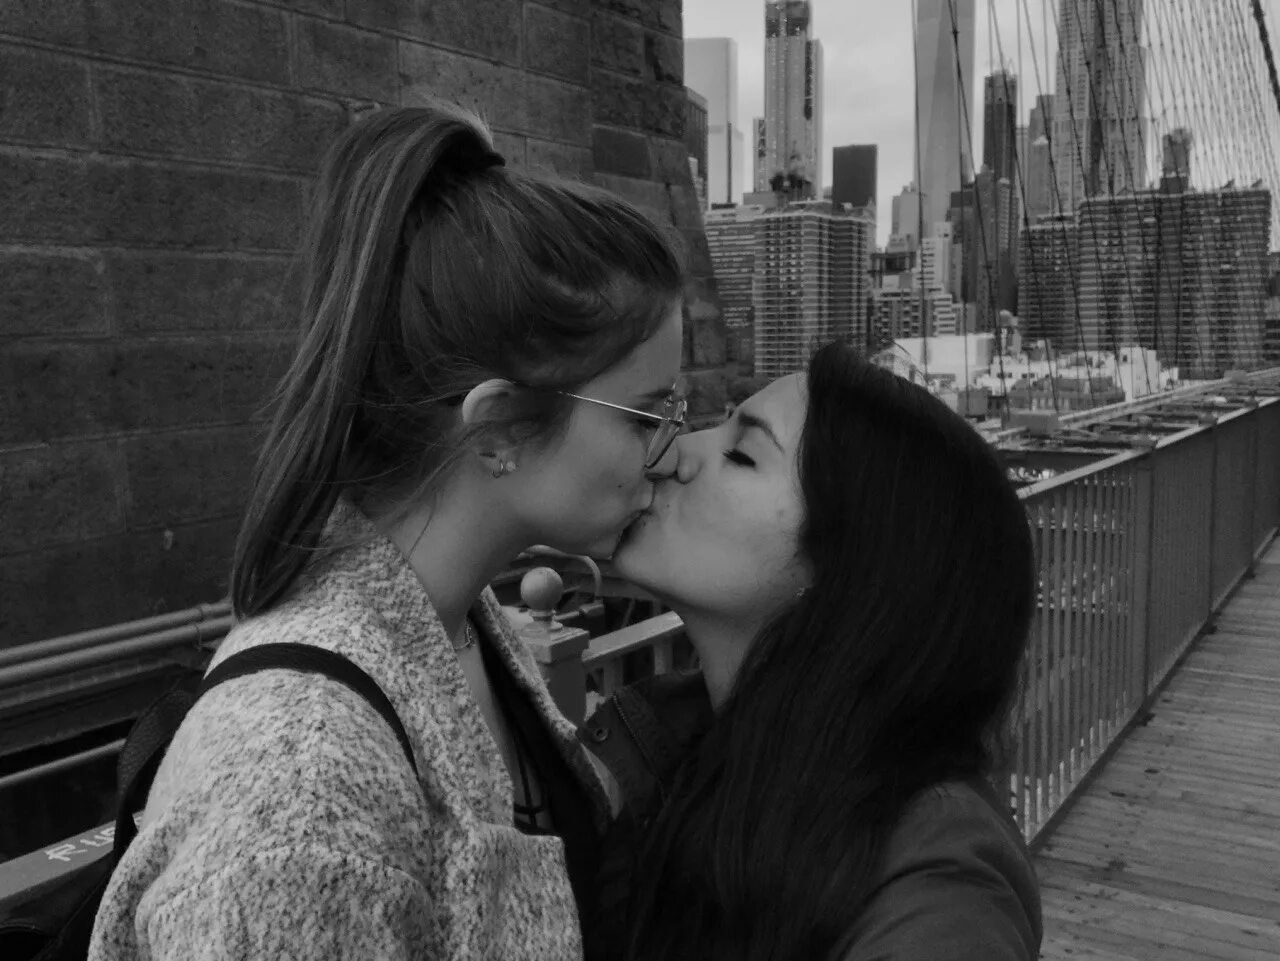 Lesbian category. Поцелуй девушек. Девушки целуются. Поцелуй девушки с девушкой. Поцелуй двух девушек.